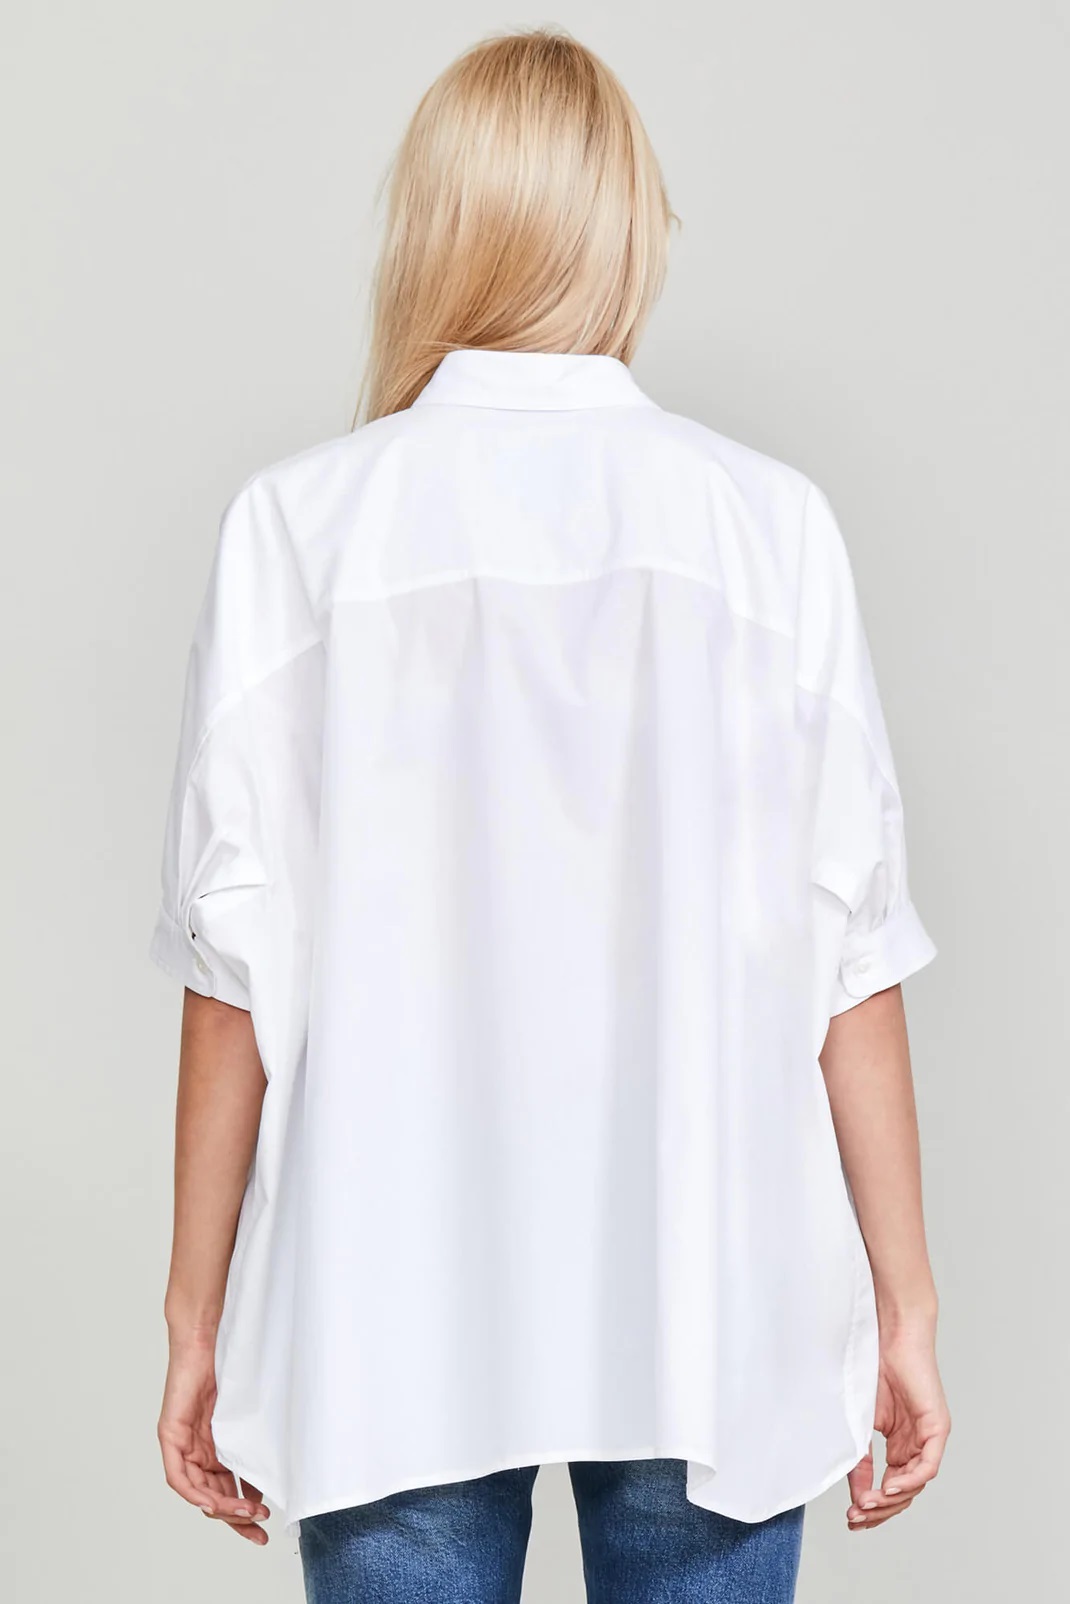 R13 Oversized Boxy Shirt in White M